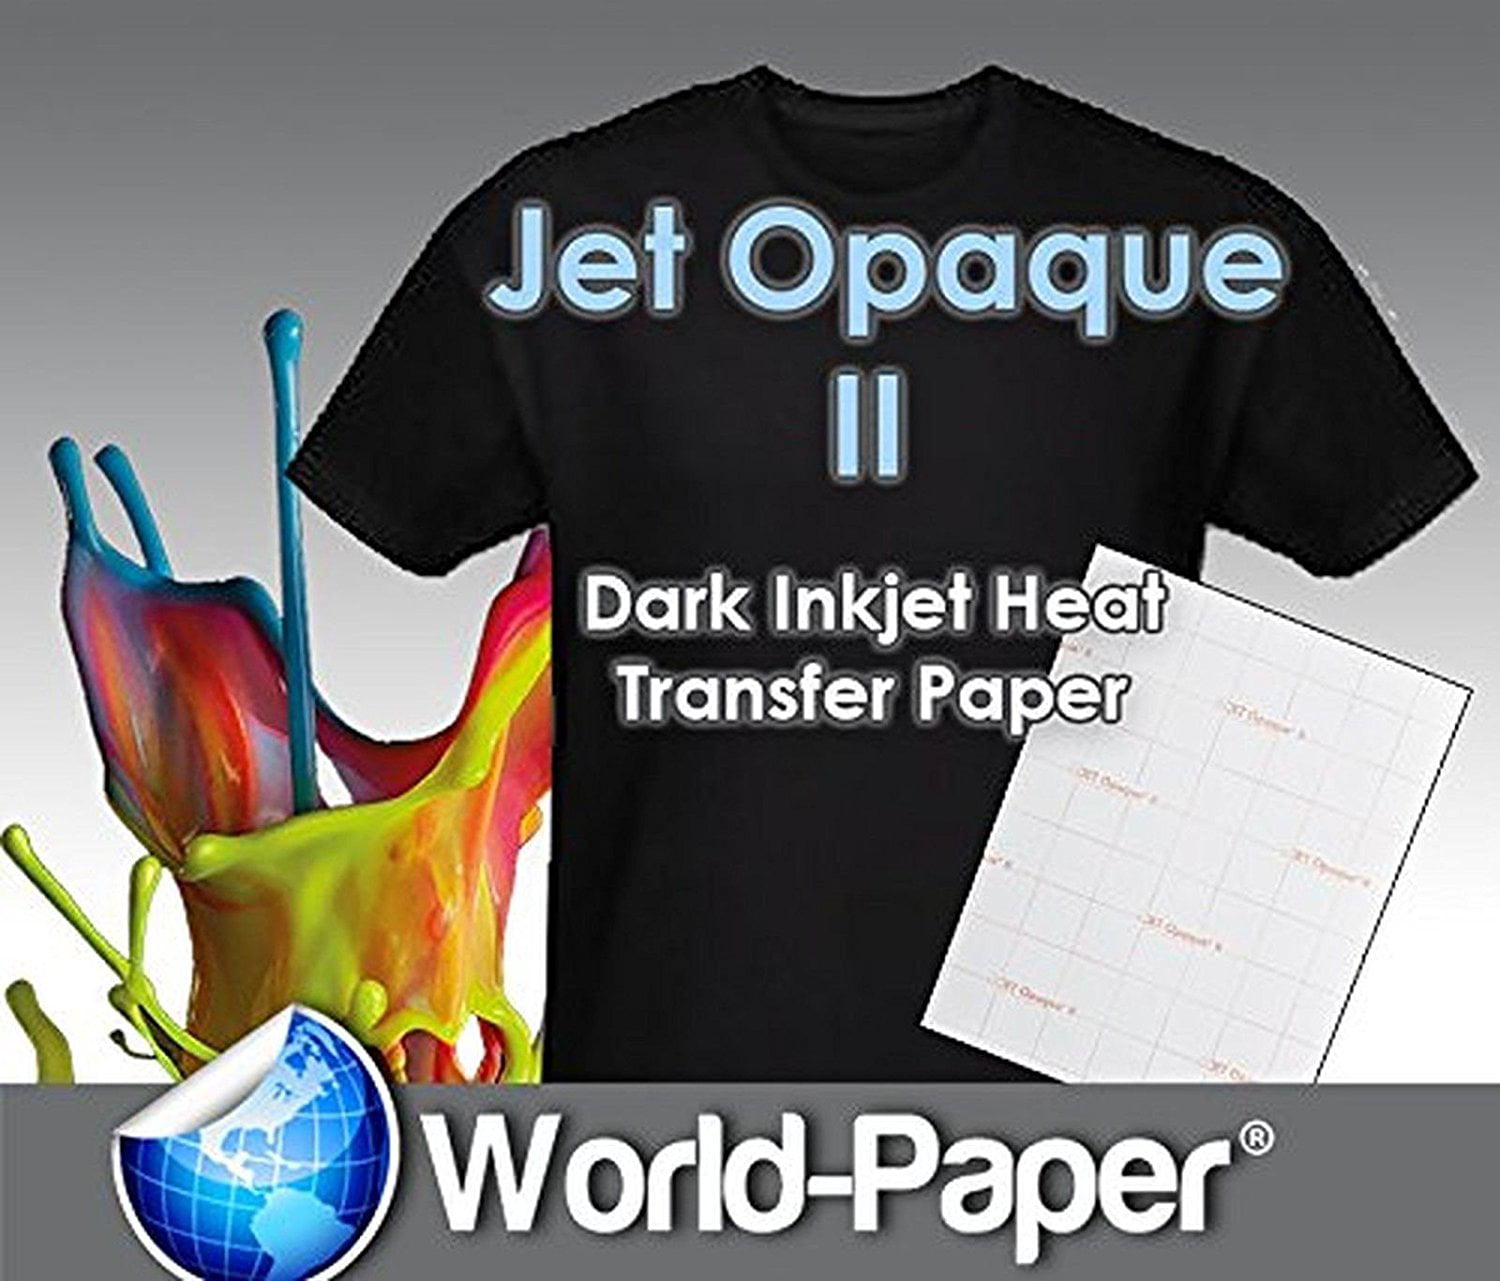 Jet Opaque II Heat Transfer Paper 8.5 x 11 *10 Sheets* 